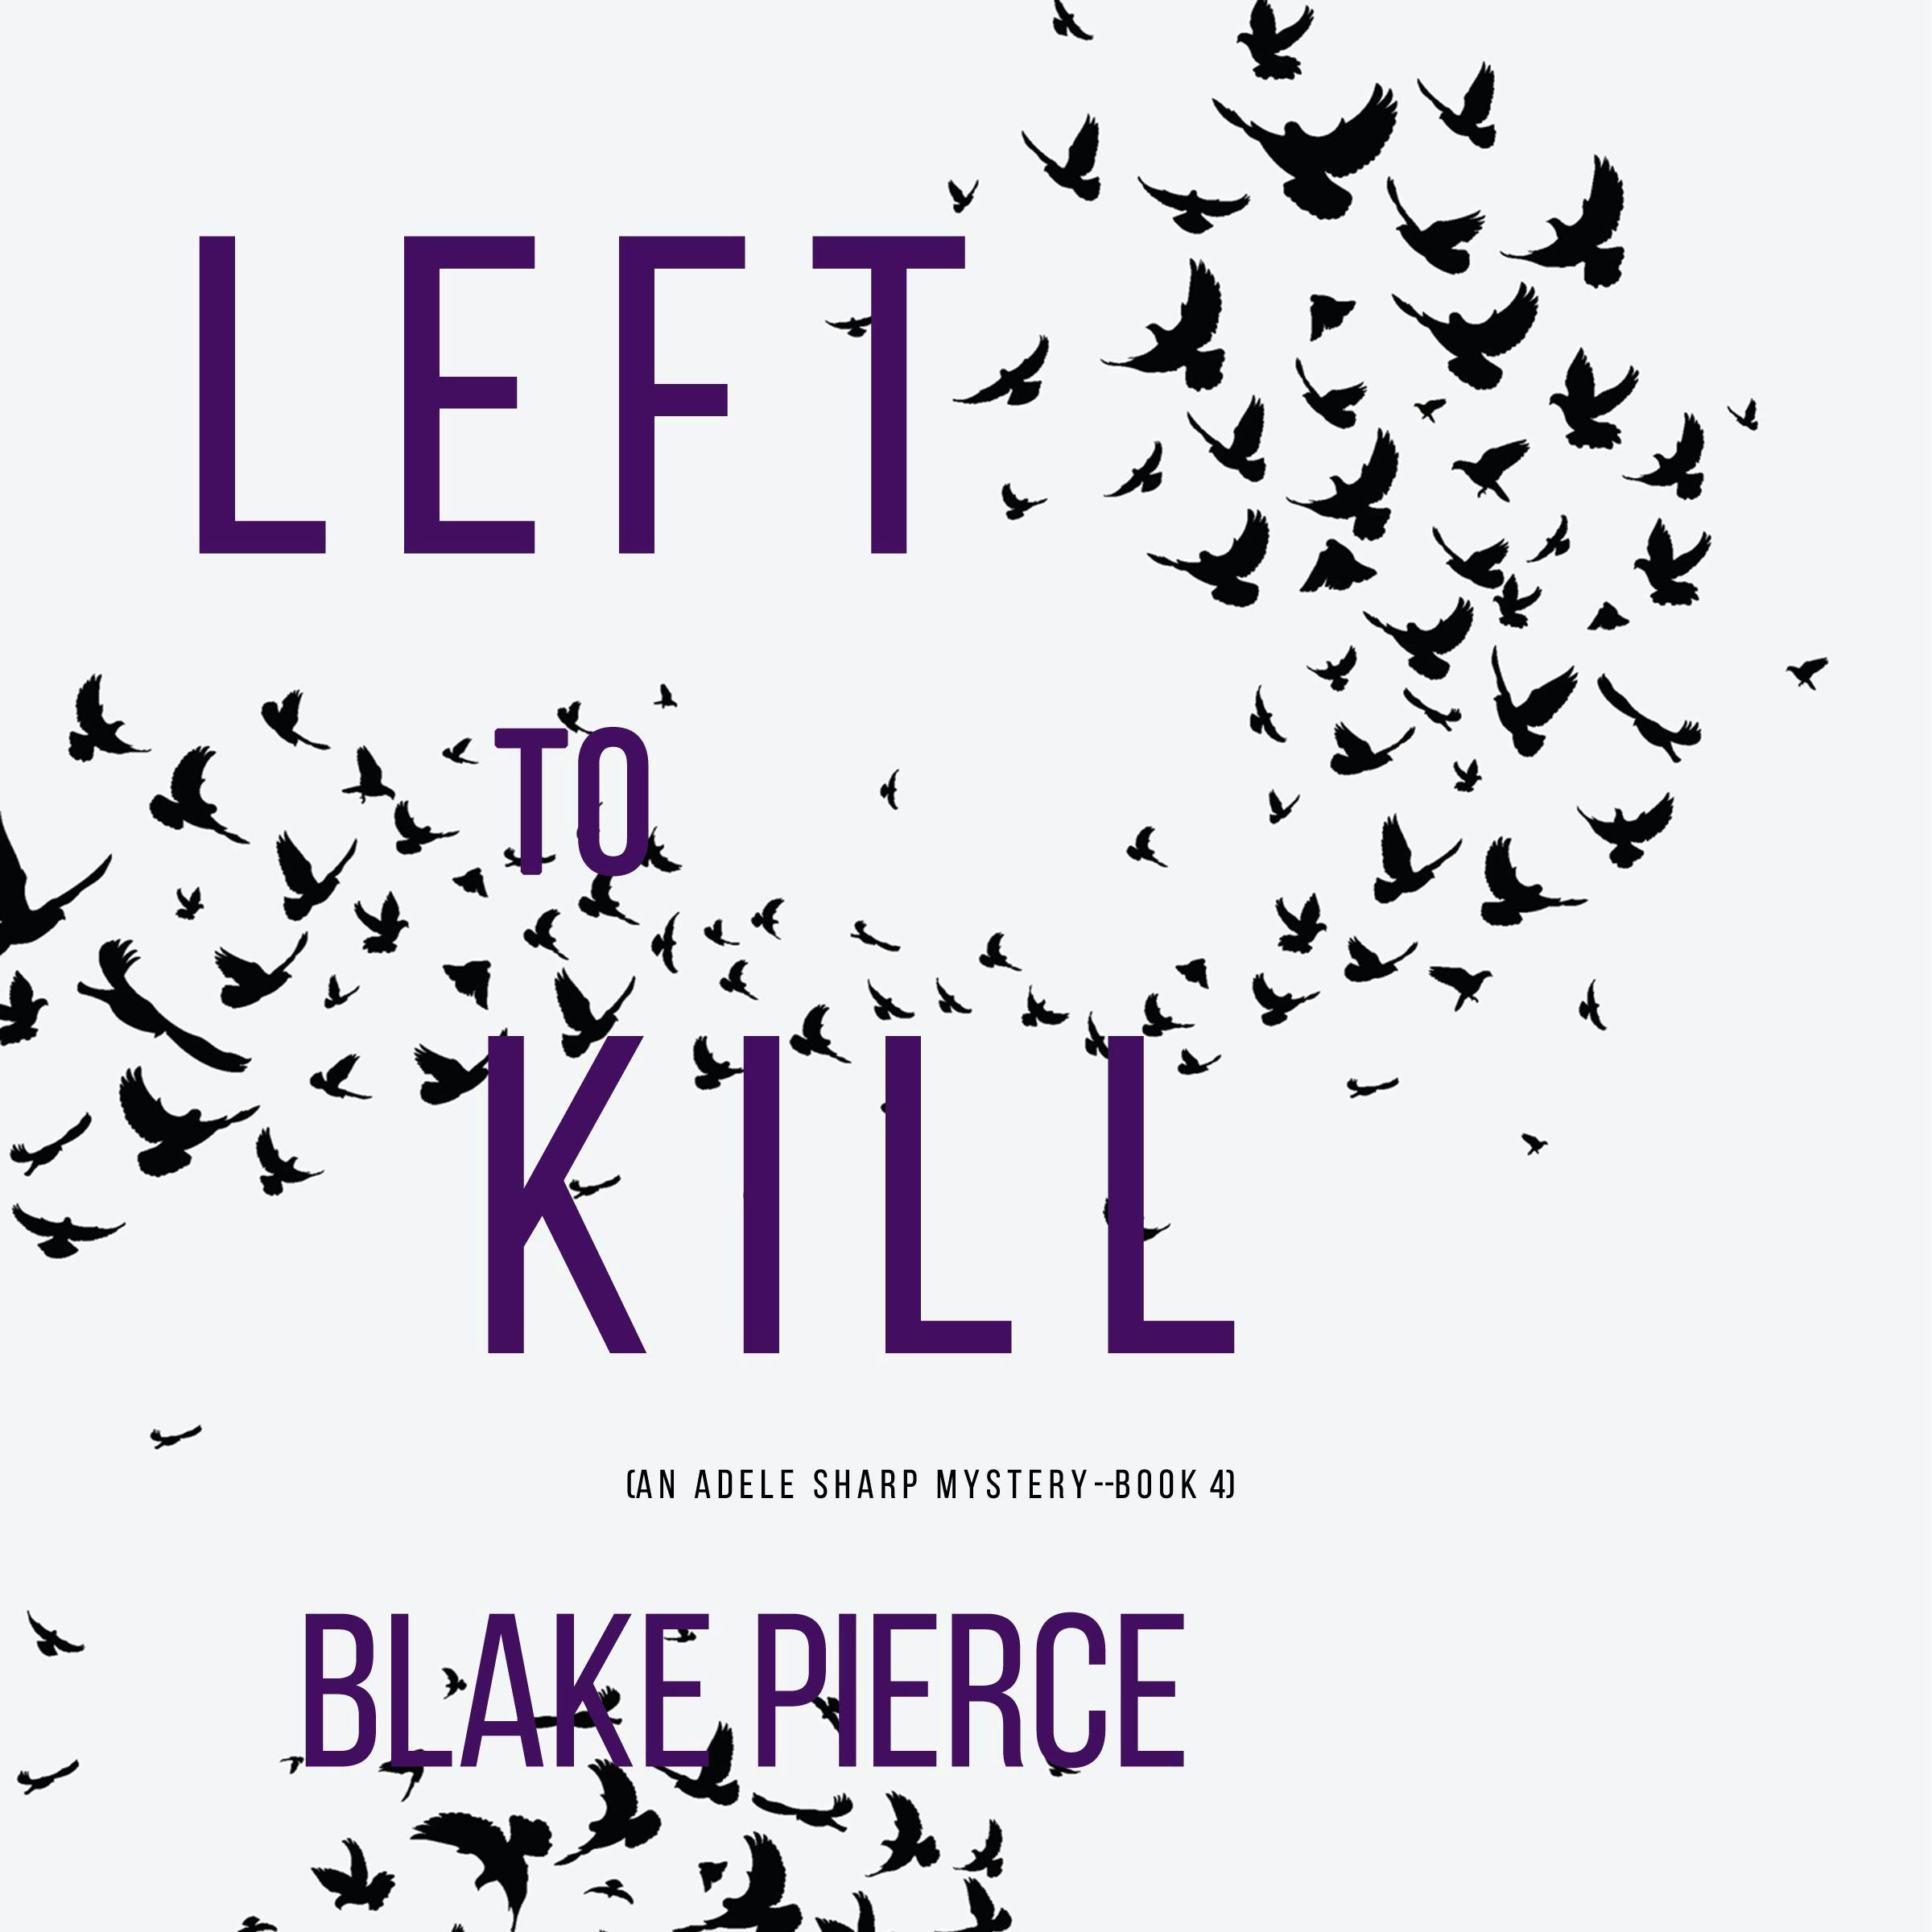 Left To Kill (An Adele Sharp Mystery—Book Four) - Blake Pierce